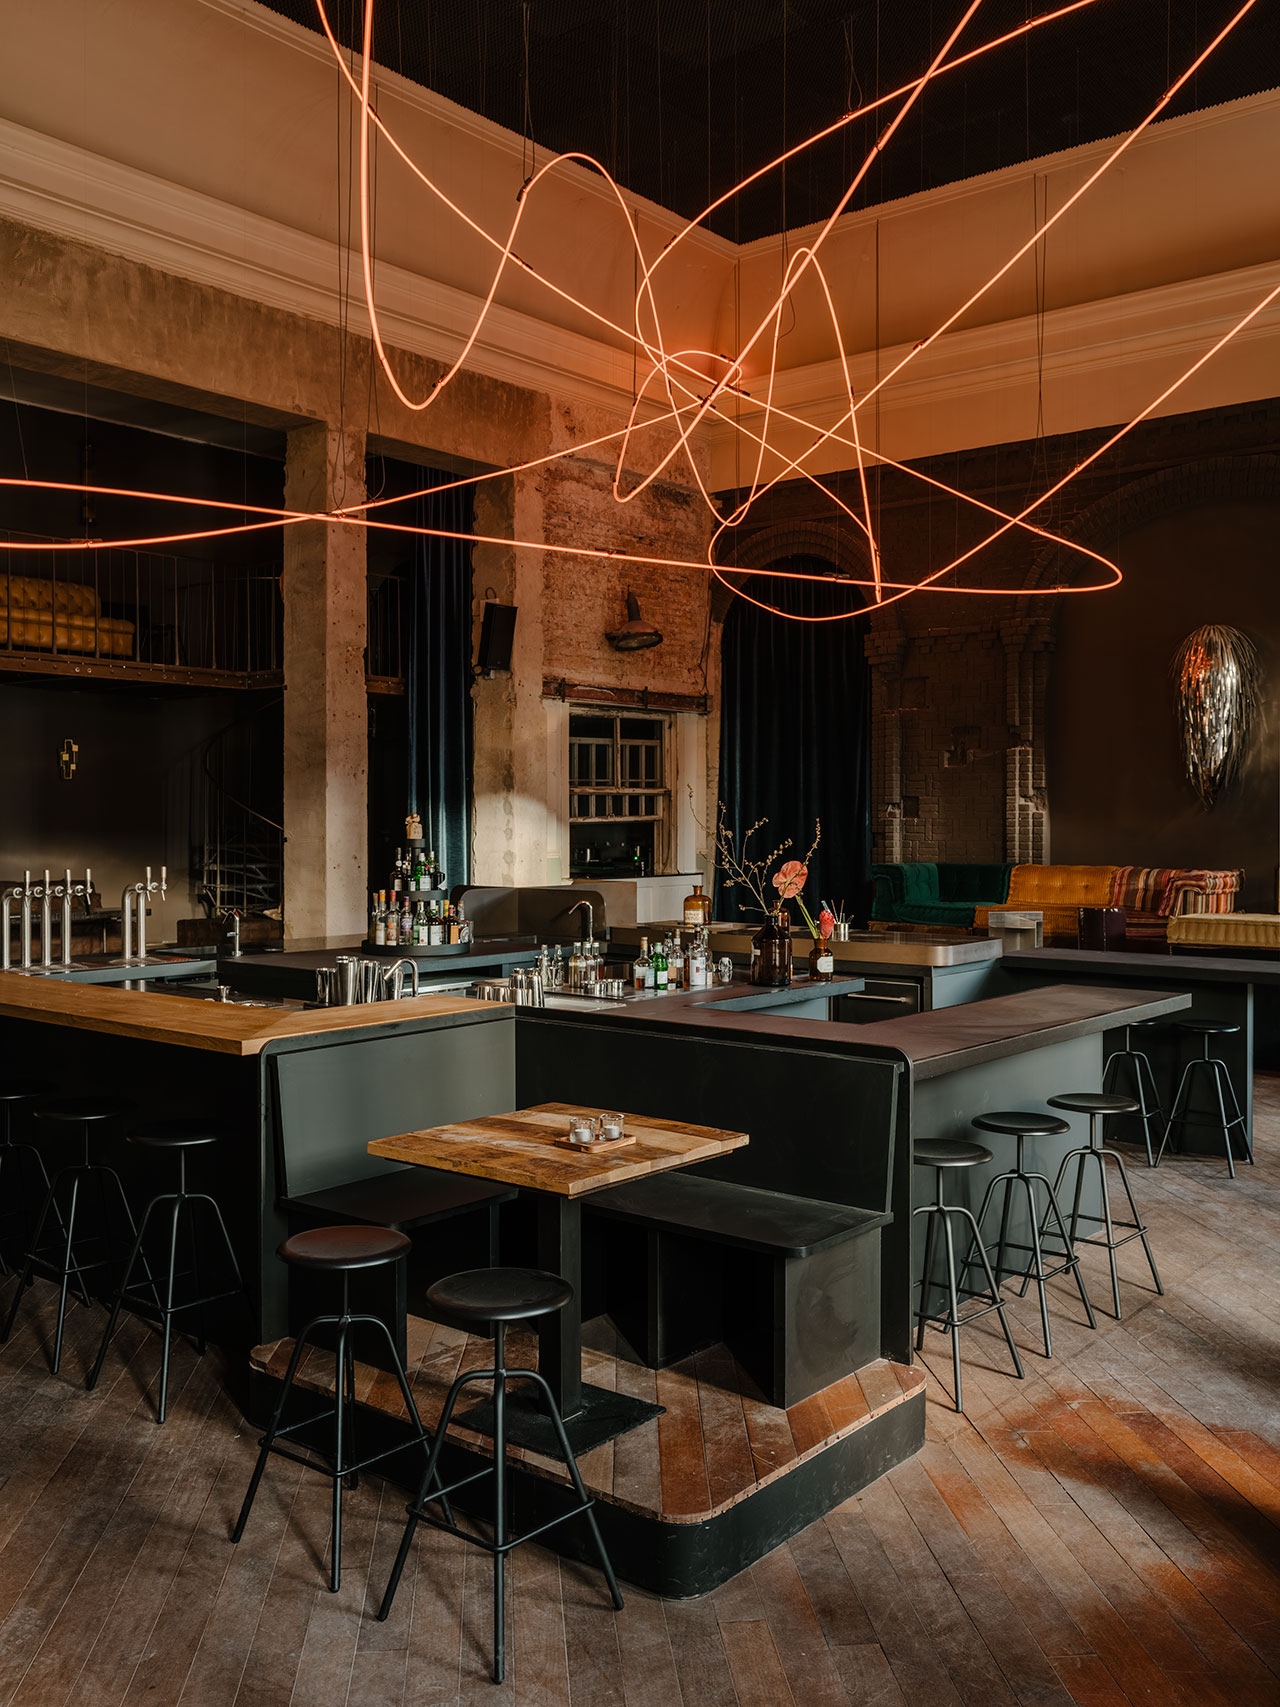 KINK Bar &amp; Restaurant.
Bar design in collaboration with Hidden Fortress.Bar stools by Atelier Haussmann.Light installation by Kerim Seiler.
Photography by Robert Rieger. Courtesy of Kerim Seiler.